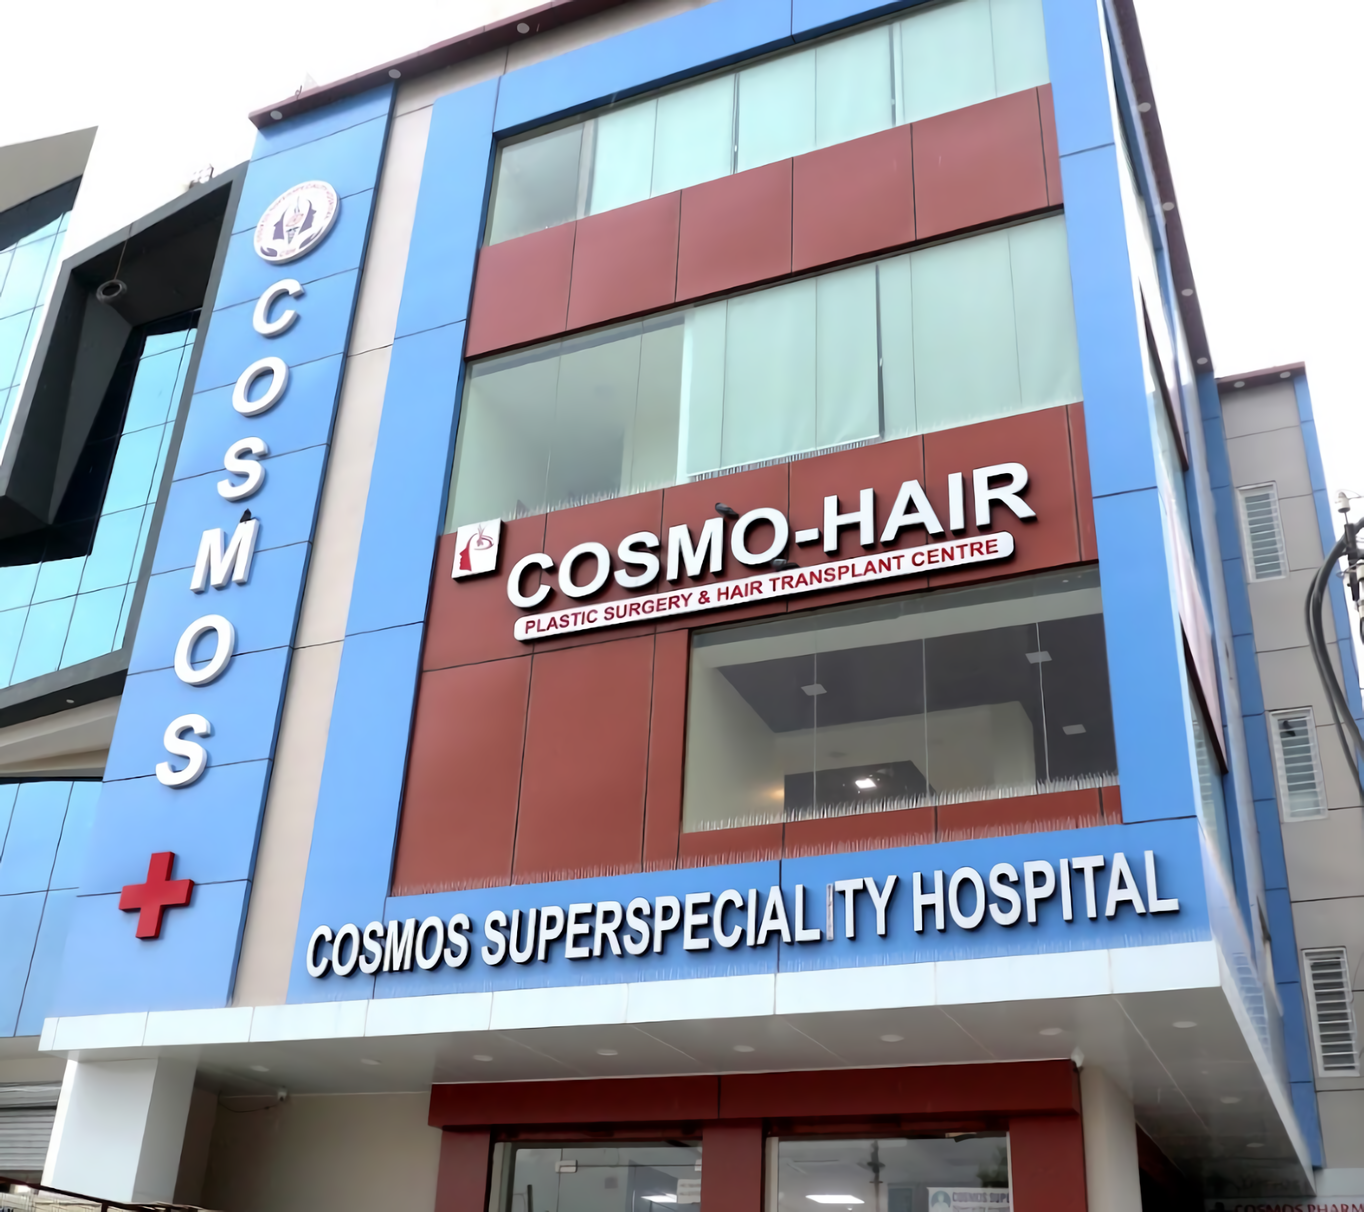 Cosmos Superspeciality Hospital Malviya Nagar, Jaipur - Contact number,  Doctors, Address | Bajaj Finserv Health